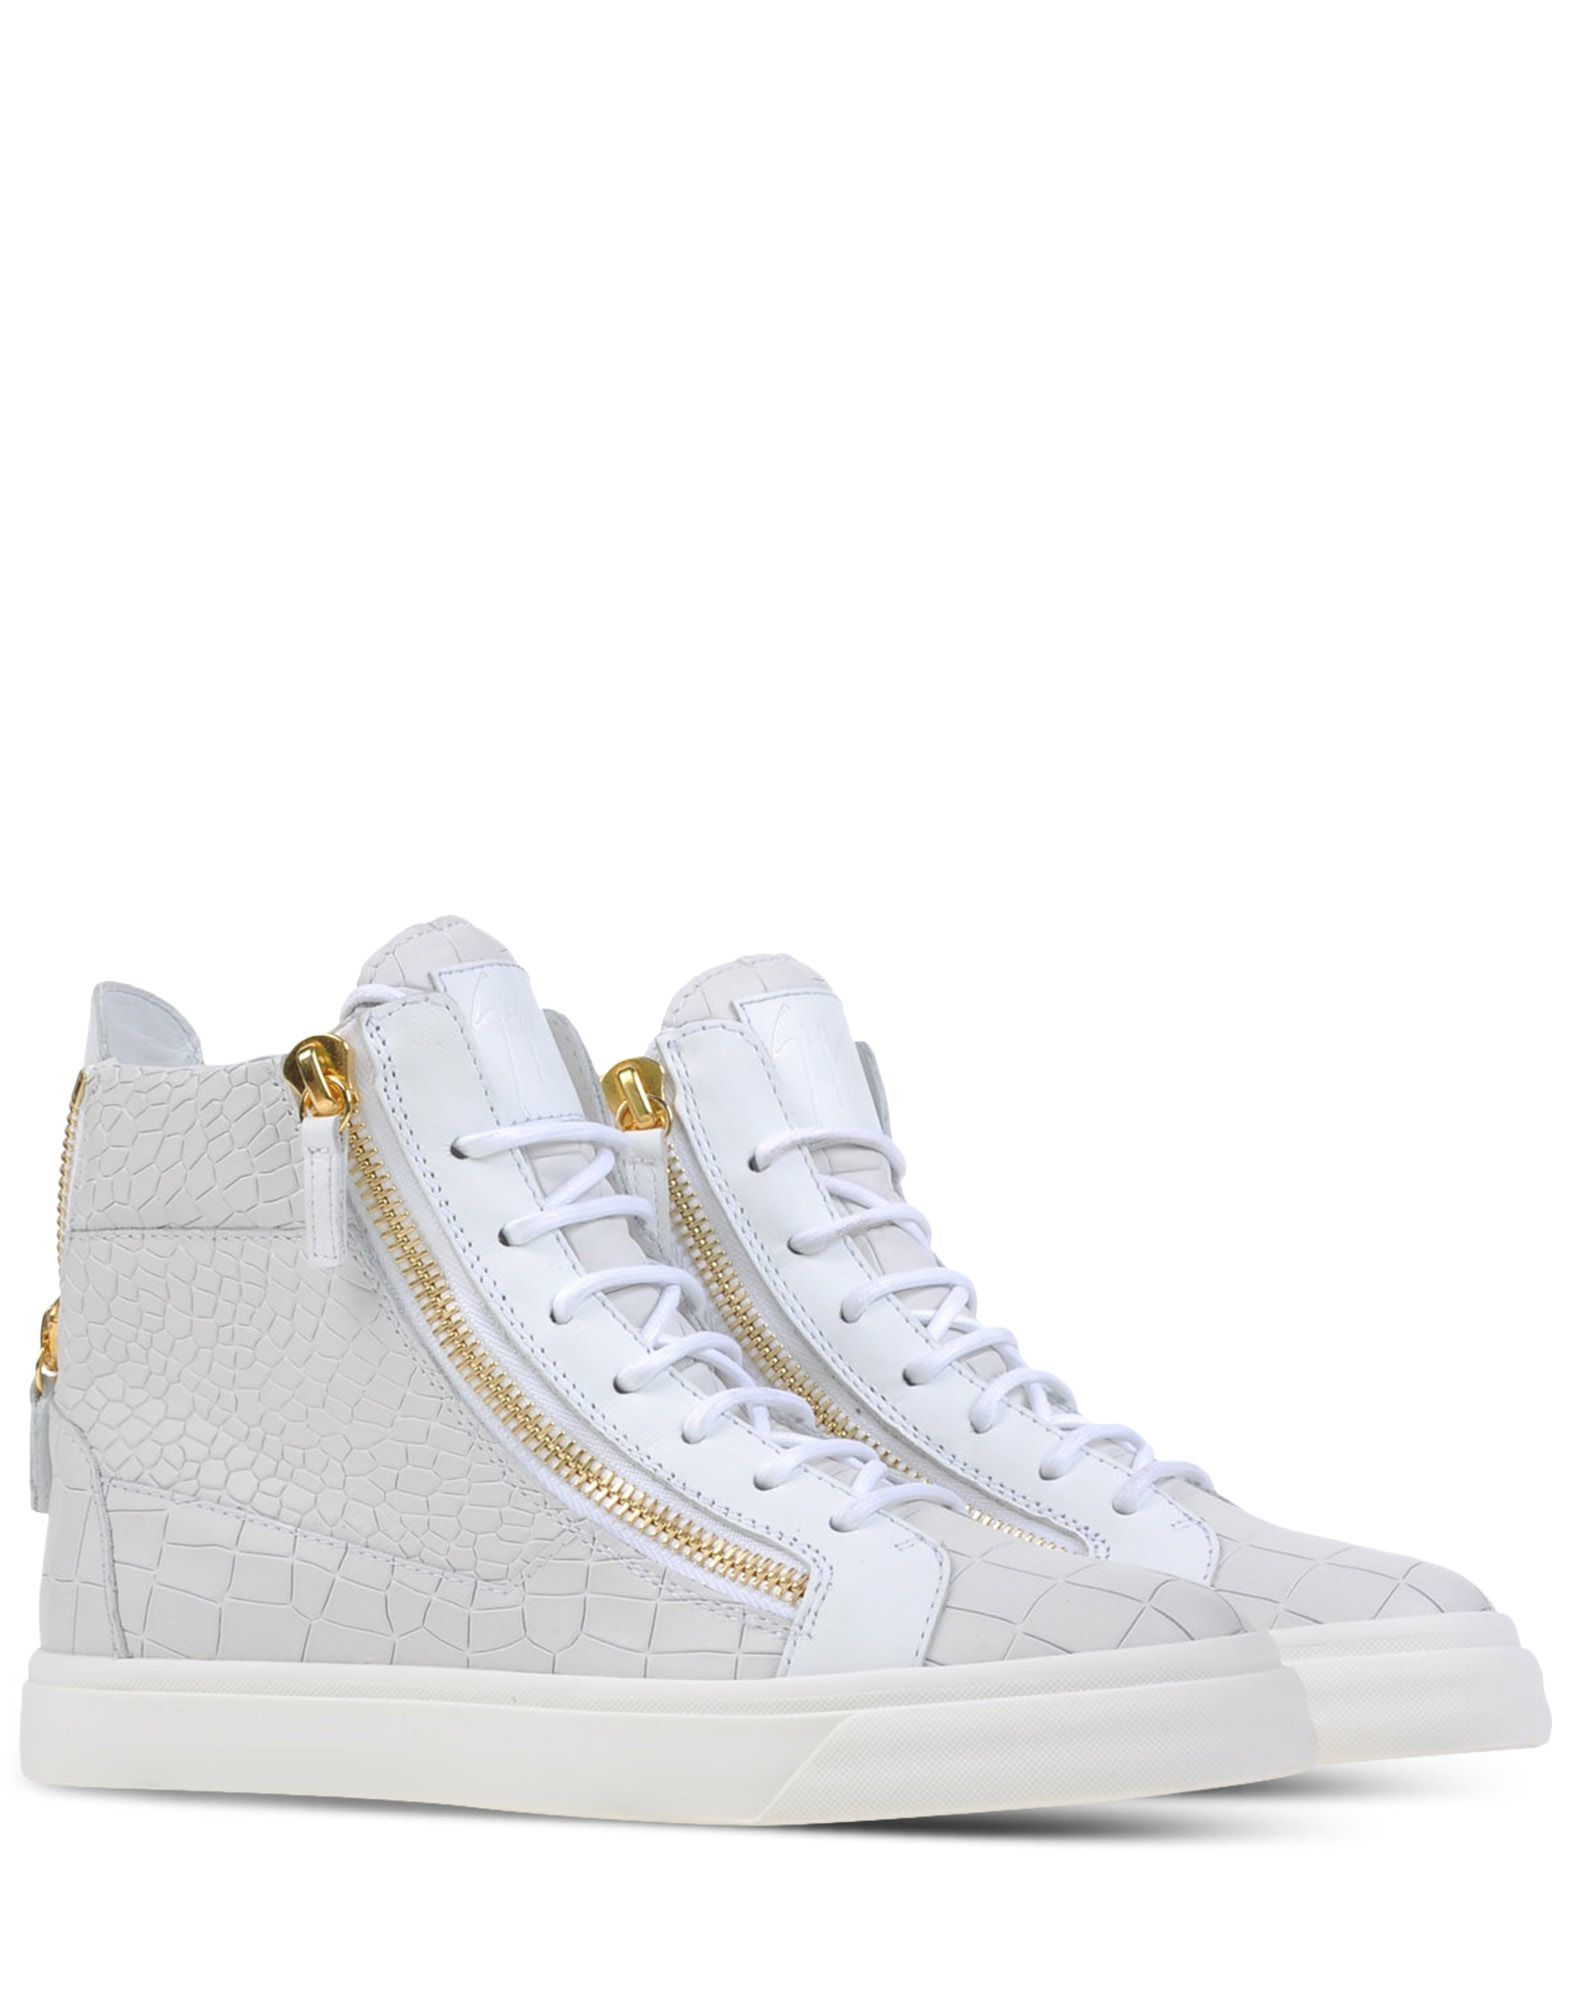 Giuseppe zanotti Nicki Croc-Embossed High-Top Sneakers in White | Lyst